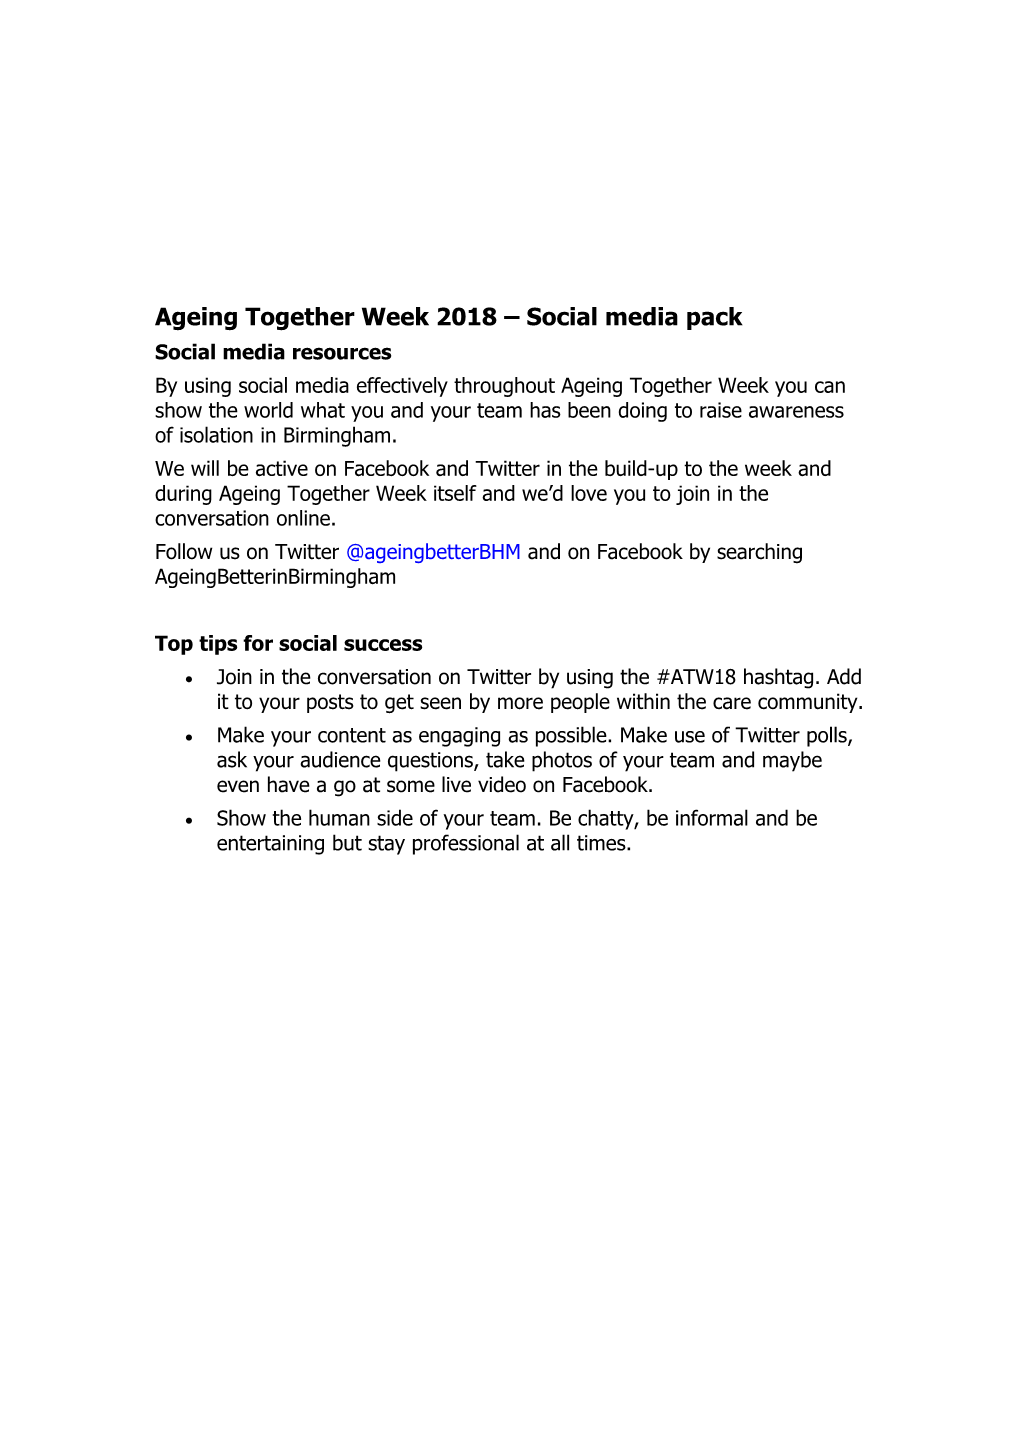 Ageing Together Week 2018 Social Media Pack